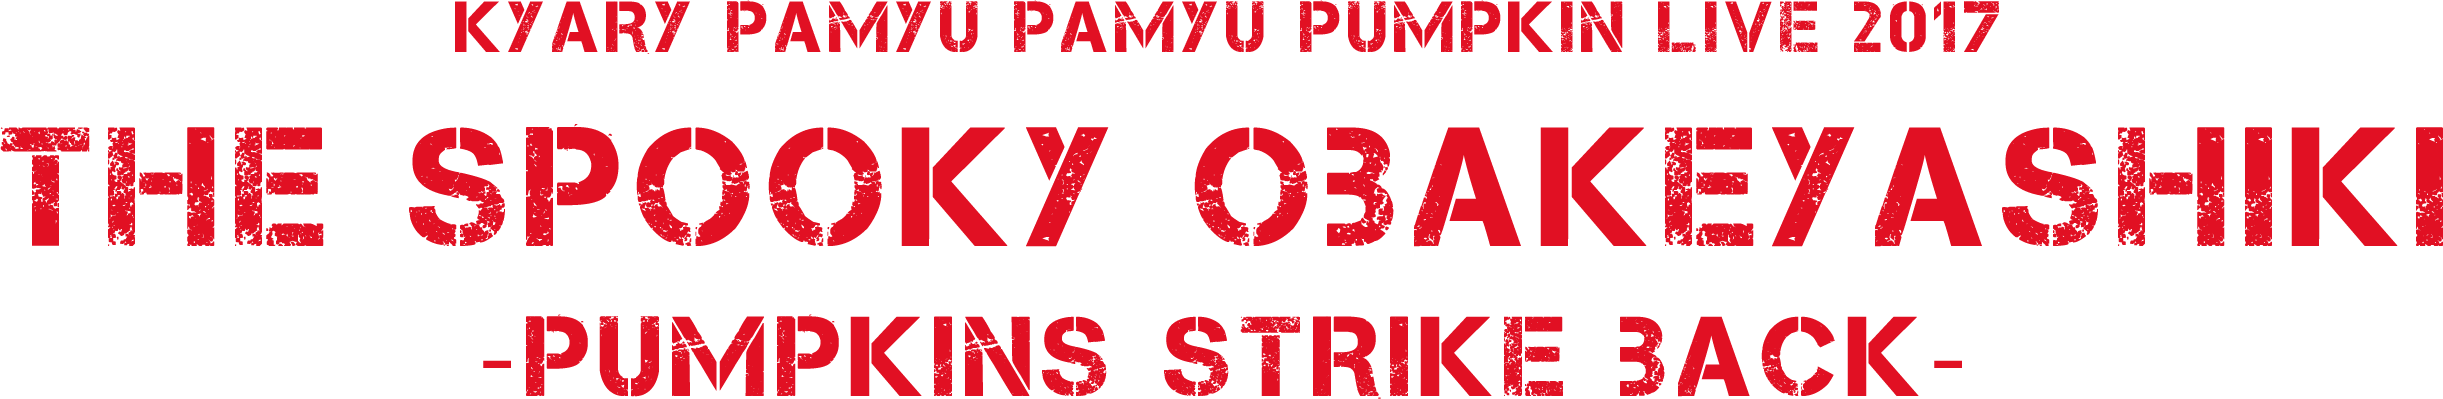 KYARY PAMYU PAMYU PUMPKIN LIVE 2017 THE SPOOKY OBAKEYASHIKI -PUMPKINS STRIKE BACK-